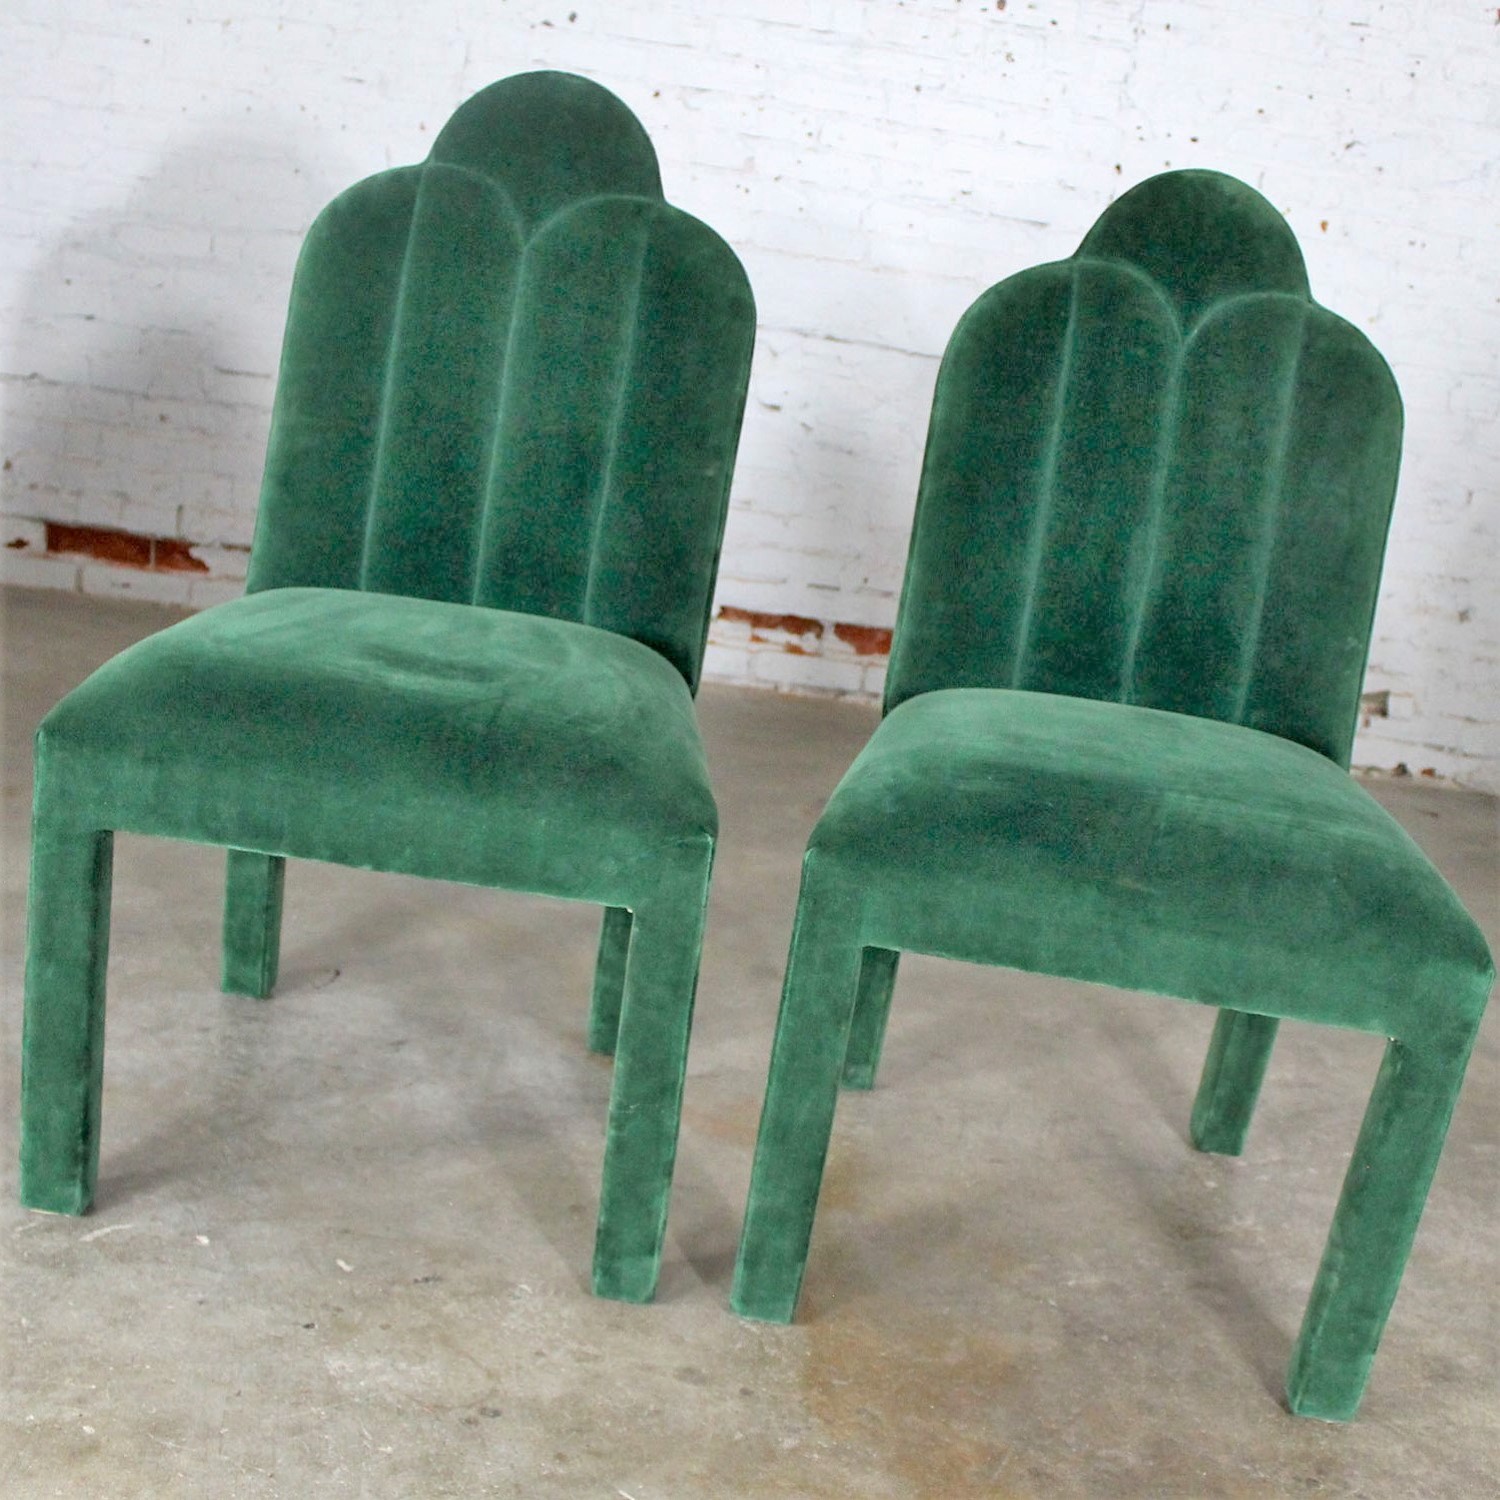 Hollywood Regency Art Deco Revival Cloverleaf Top Green Velvet Parson Style Dining Chairs Set of Four